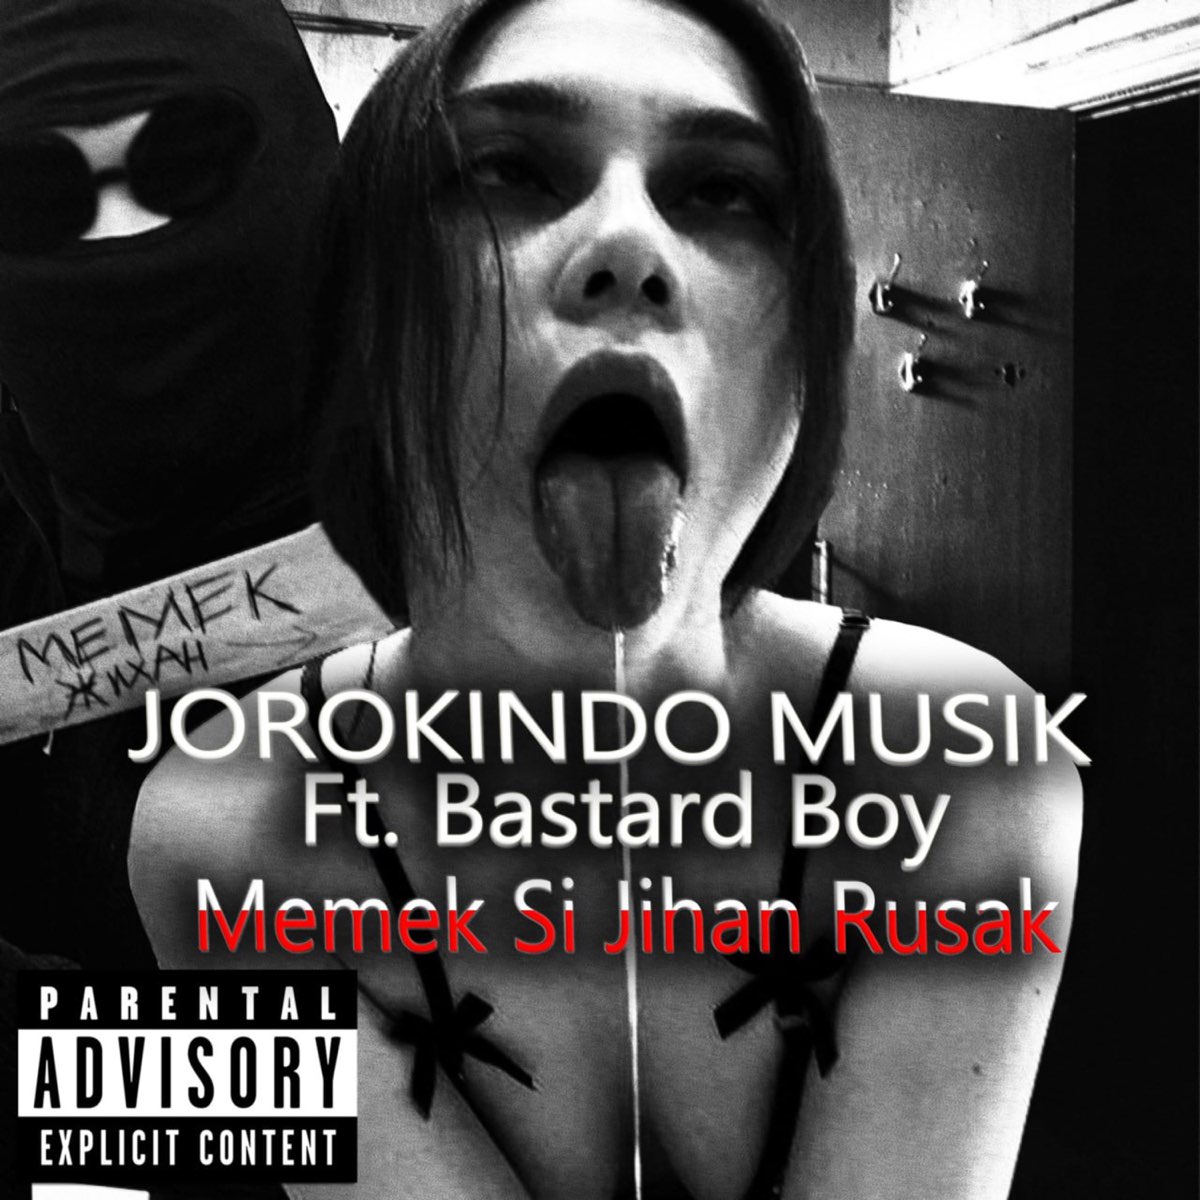 memek si jihan rusak - Single - Album by Jorokindo musik & Bastard ...